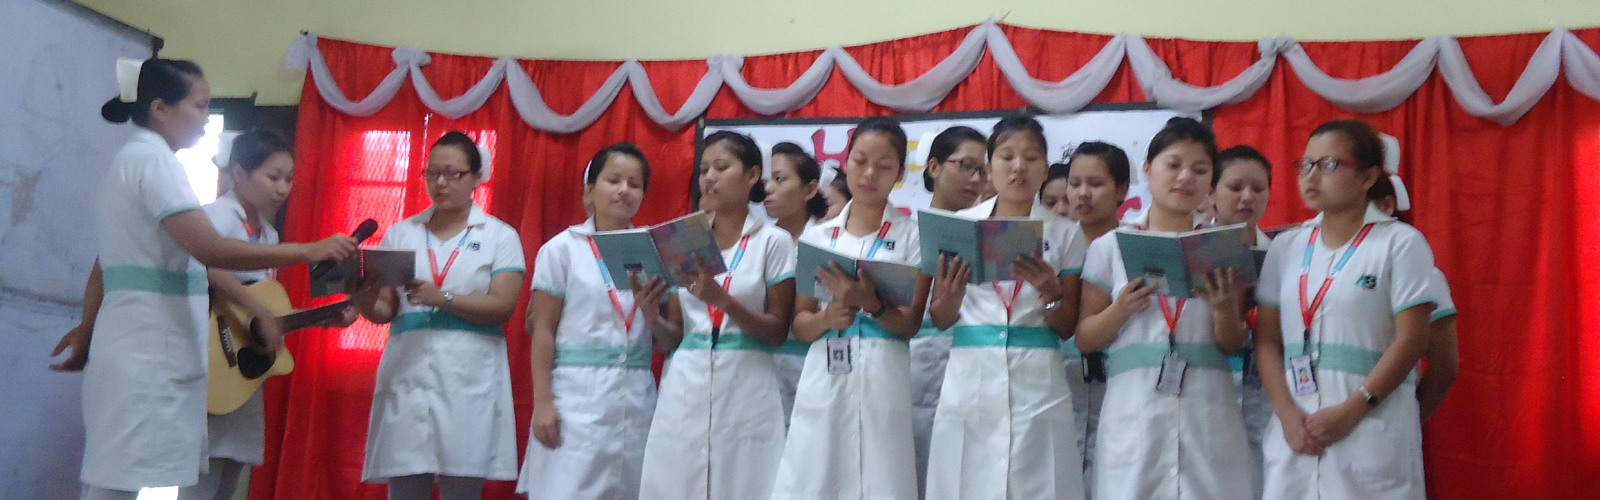 Welcome to Satribari Christian Hospital School of Nursing